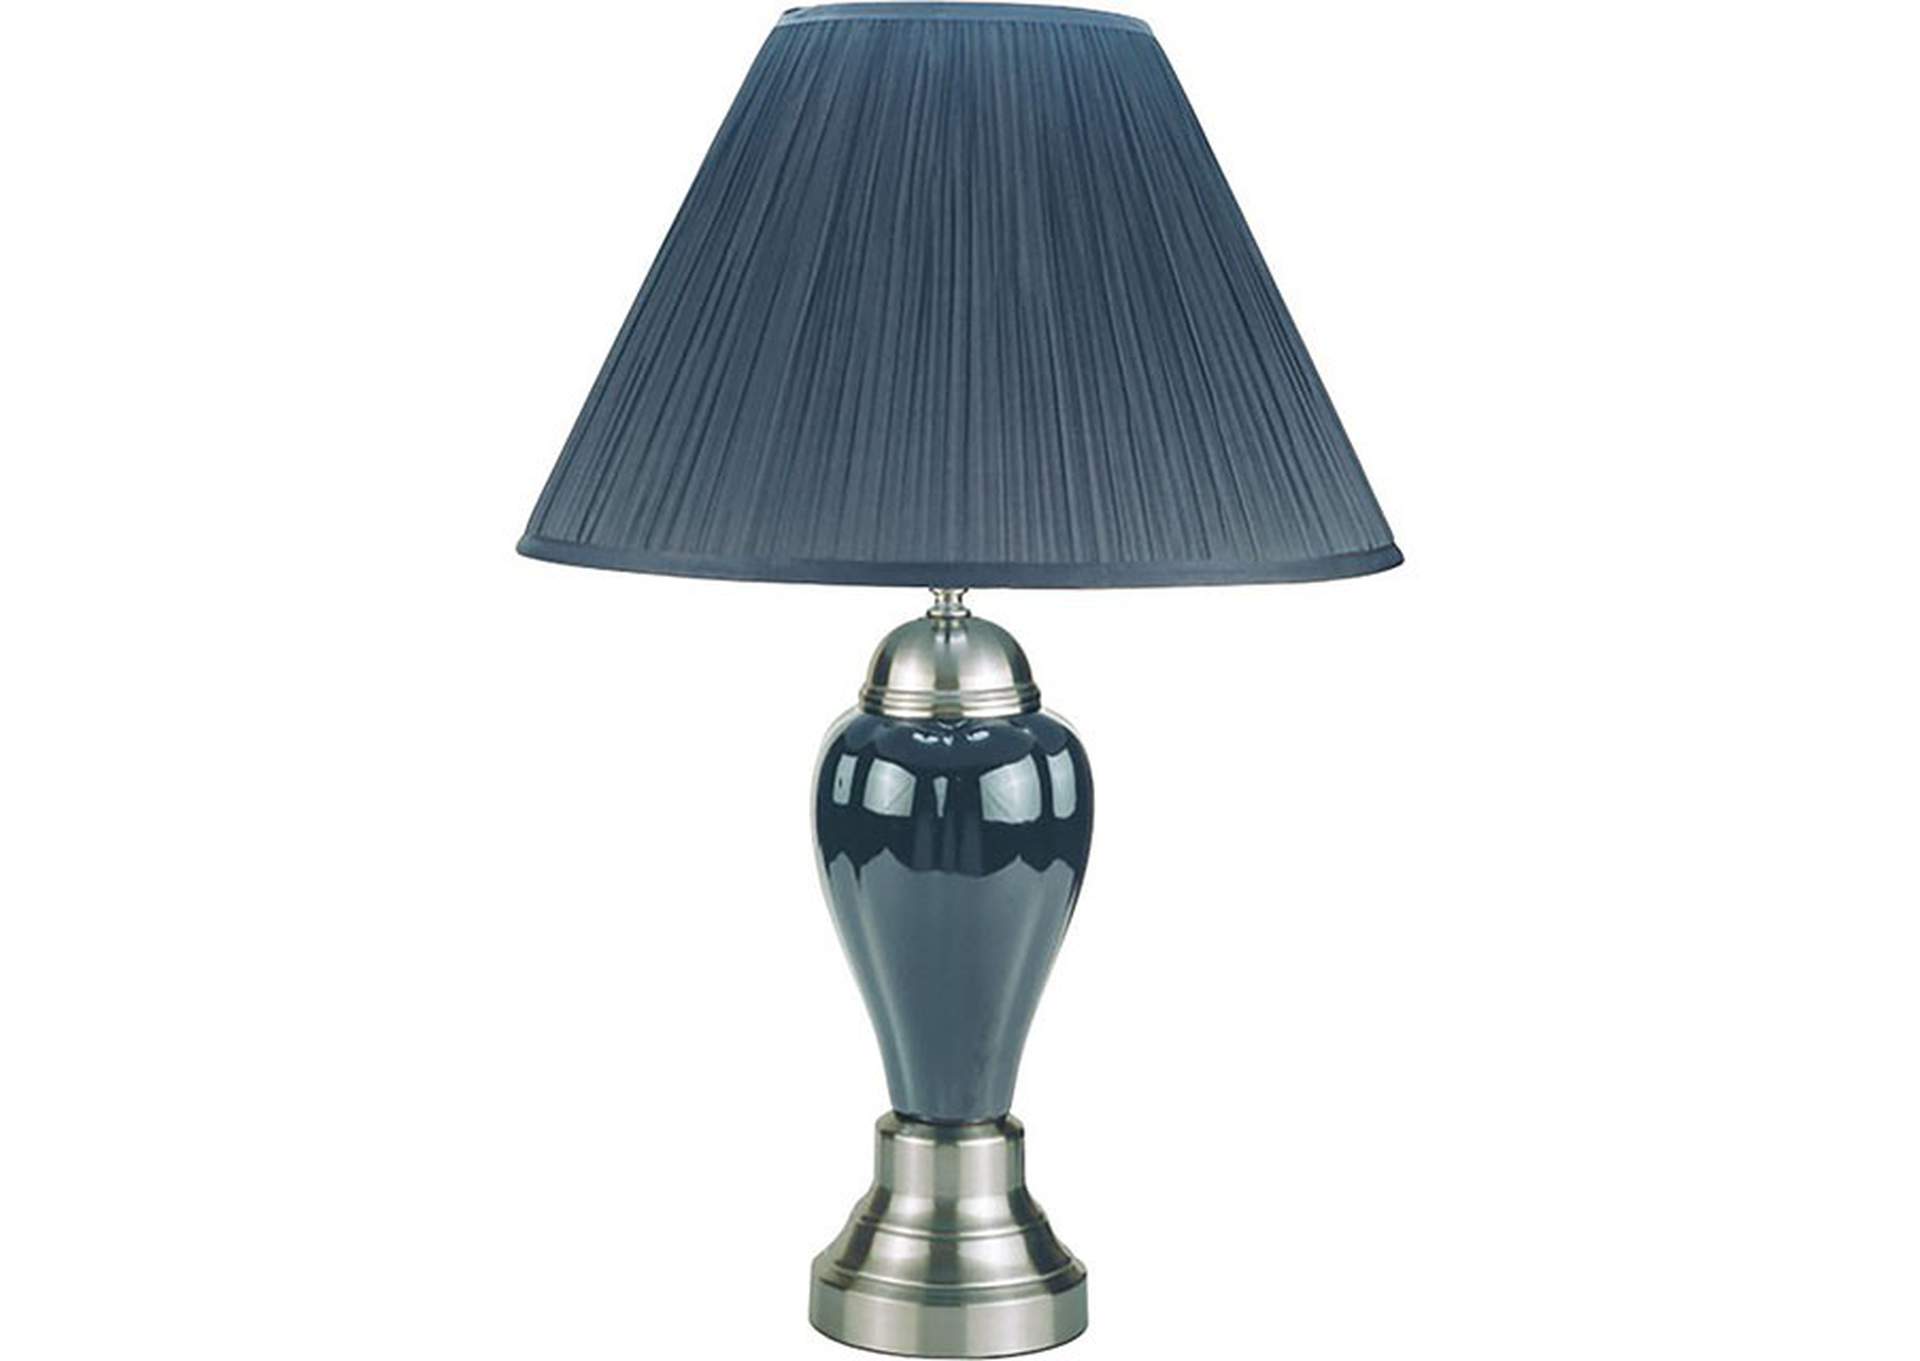 Hanna Table Lamp,Furniture of America